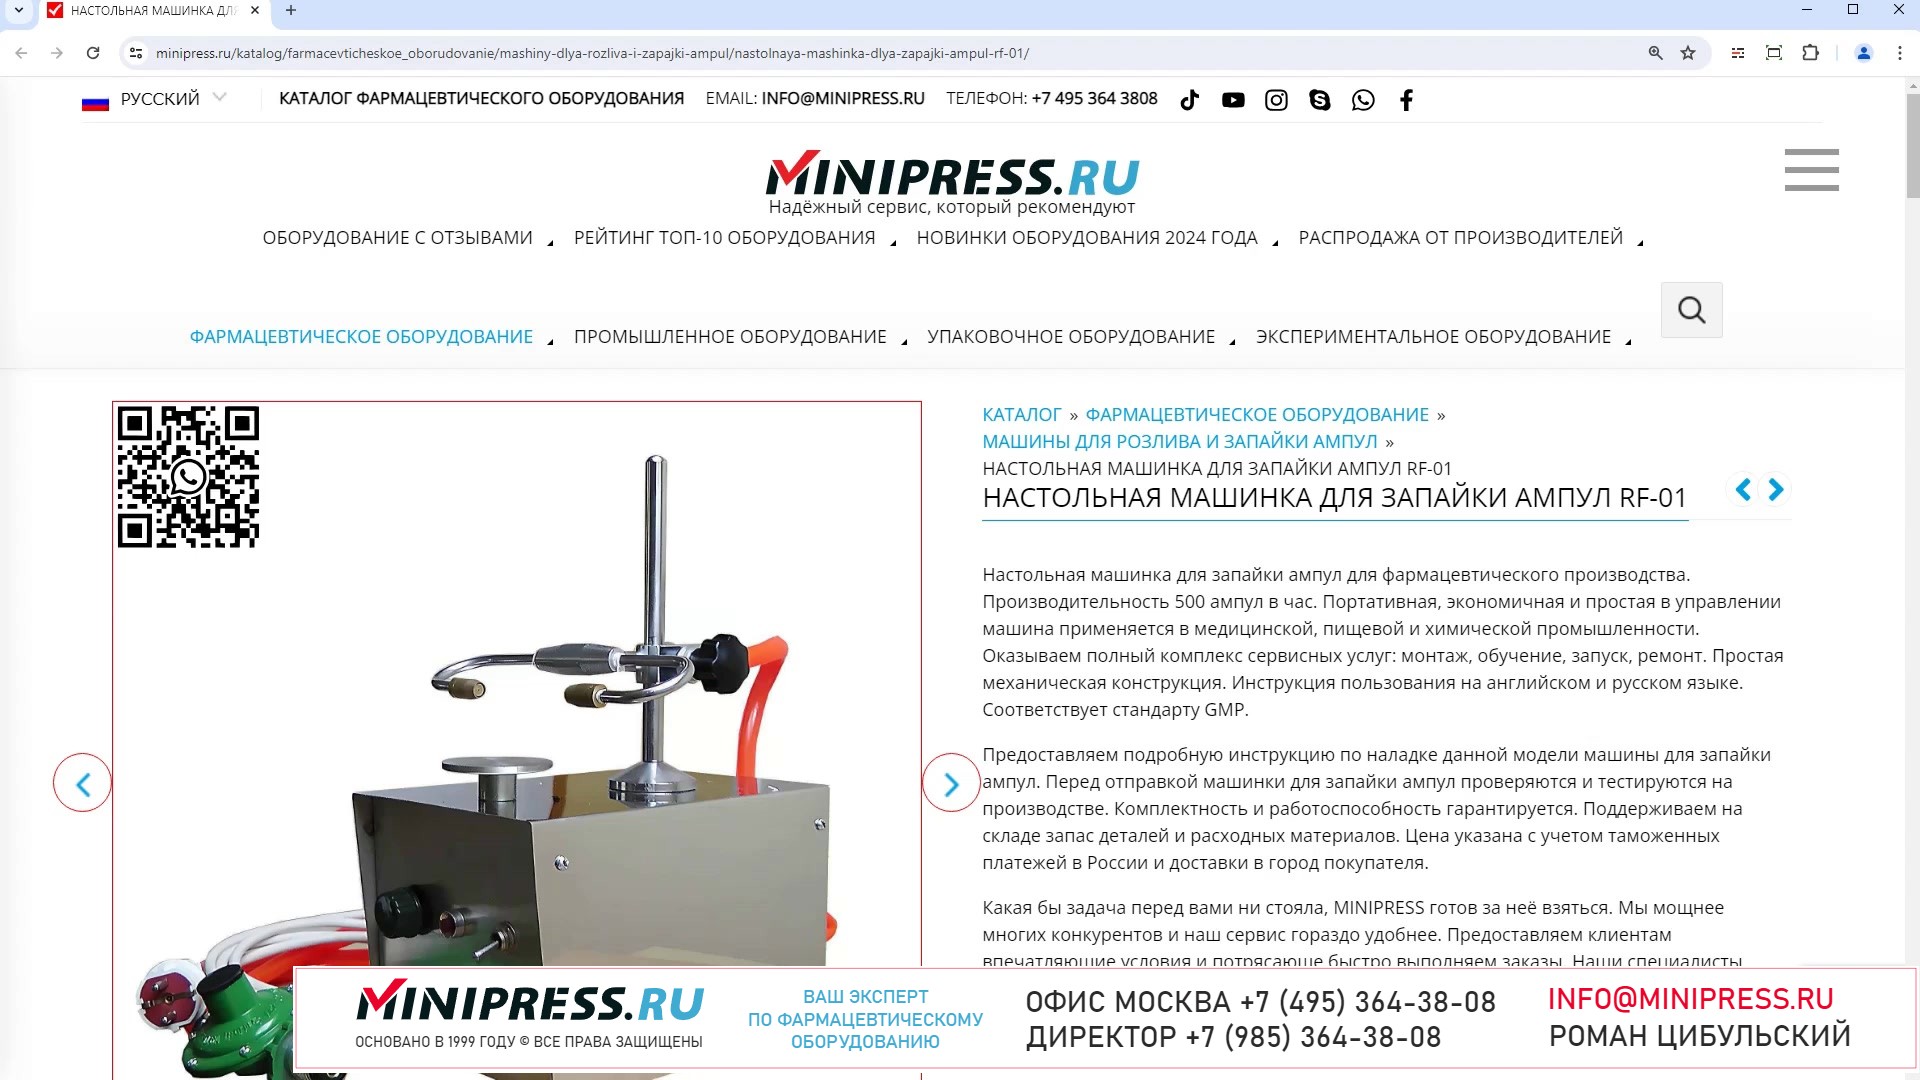 Minipress.ru Настольная машинка для запайки ампул RF-01